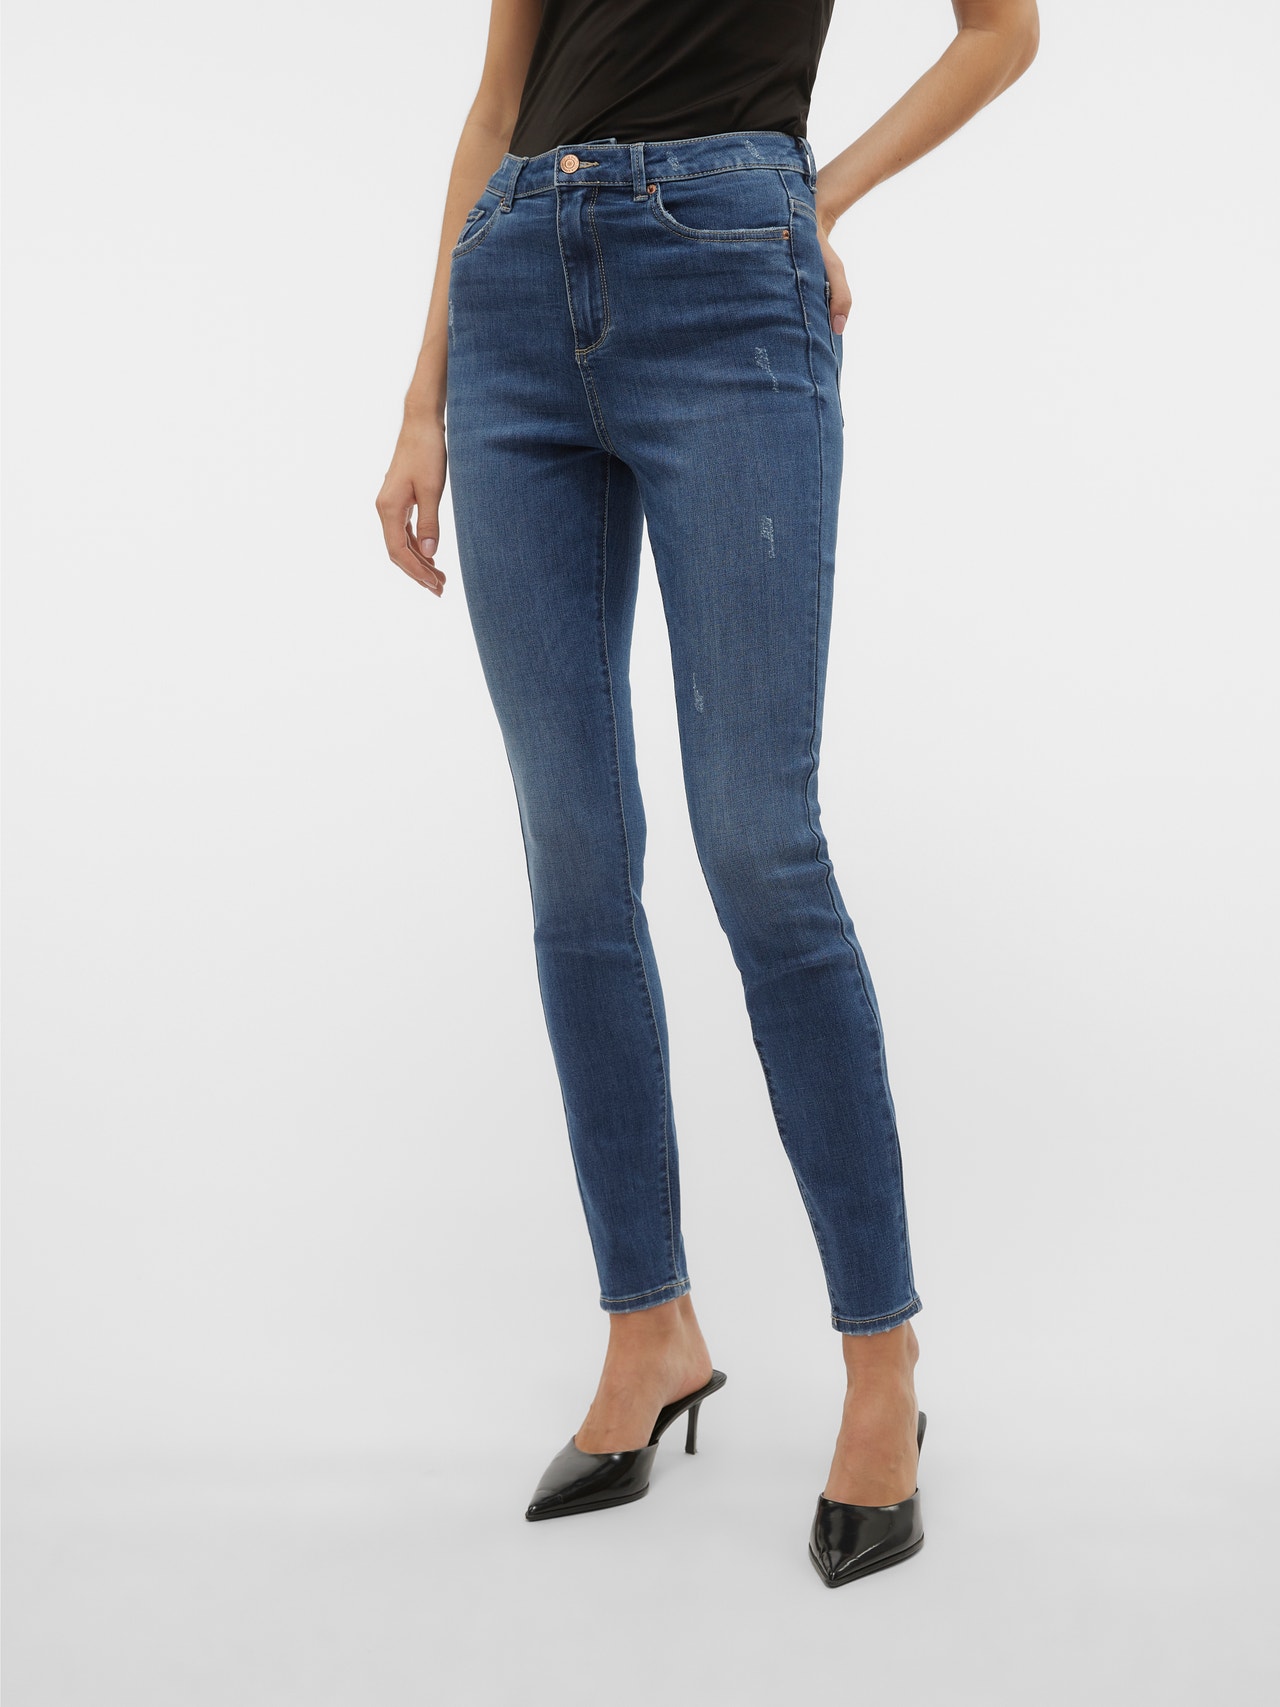 rise Medium Blue VMSOPHIA | | Moda® High Vero Jeans